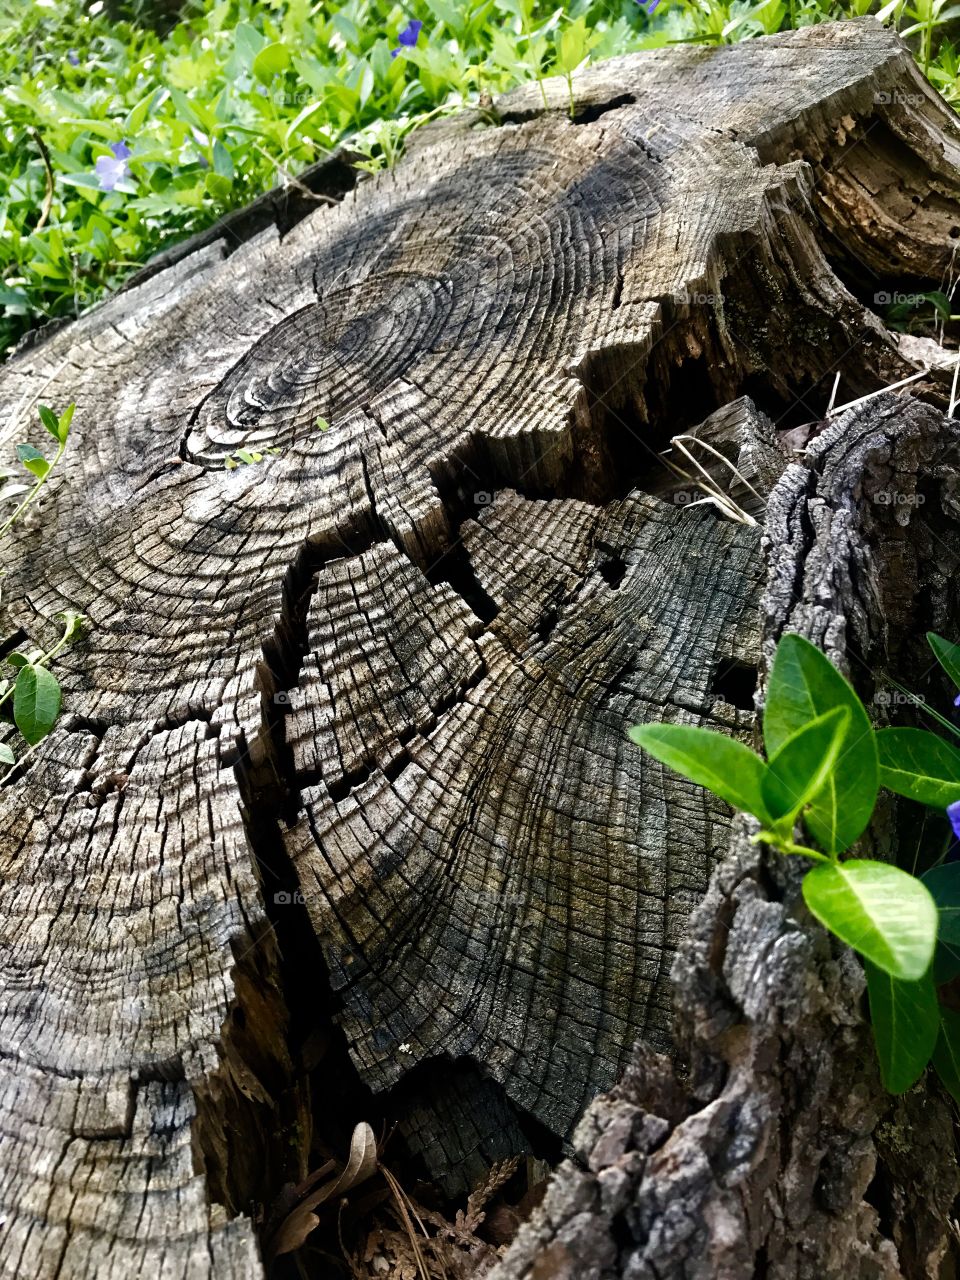 Tree stump life